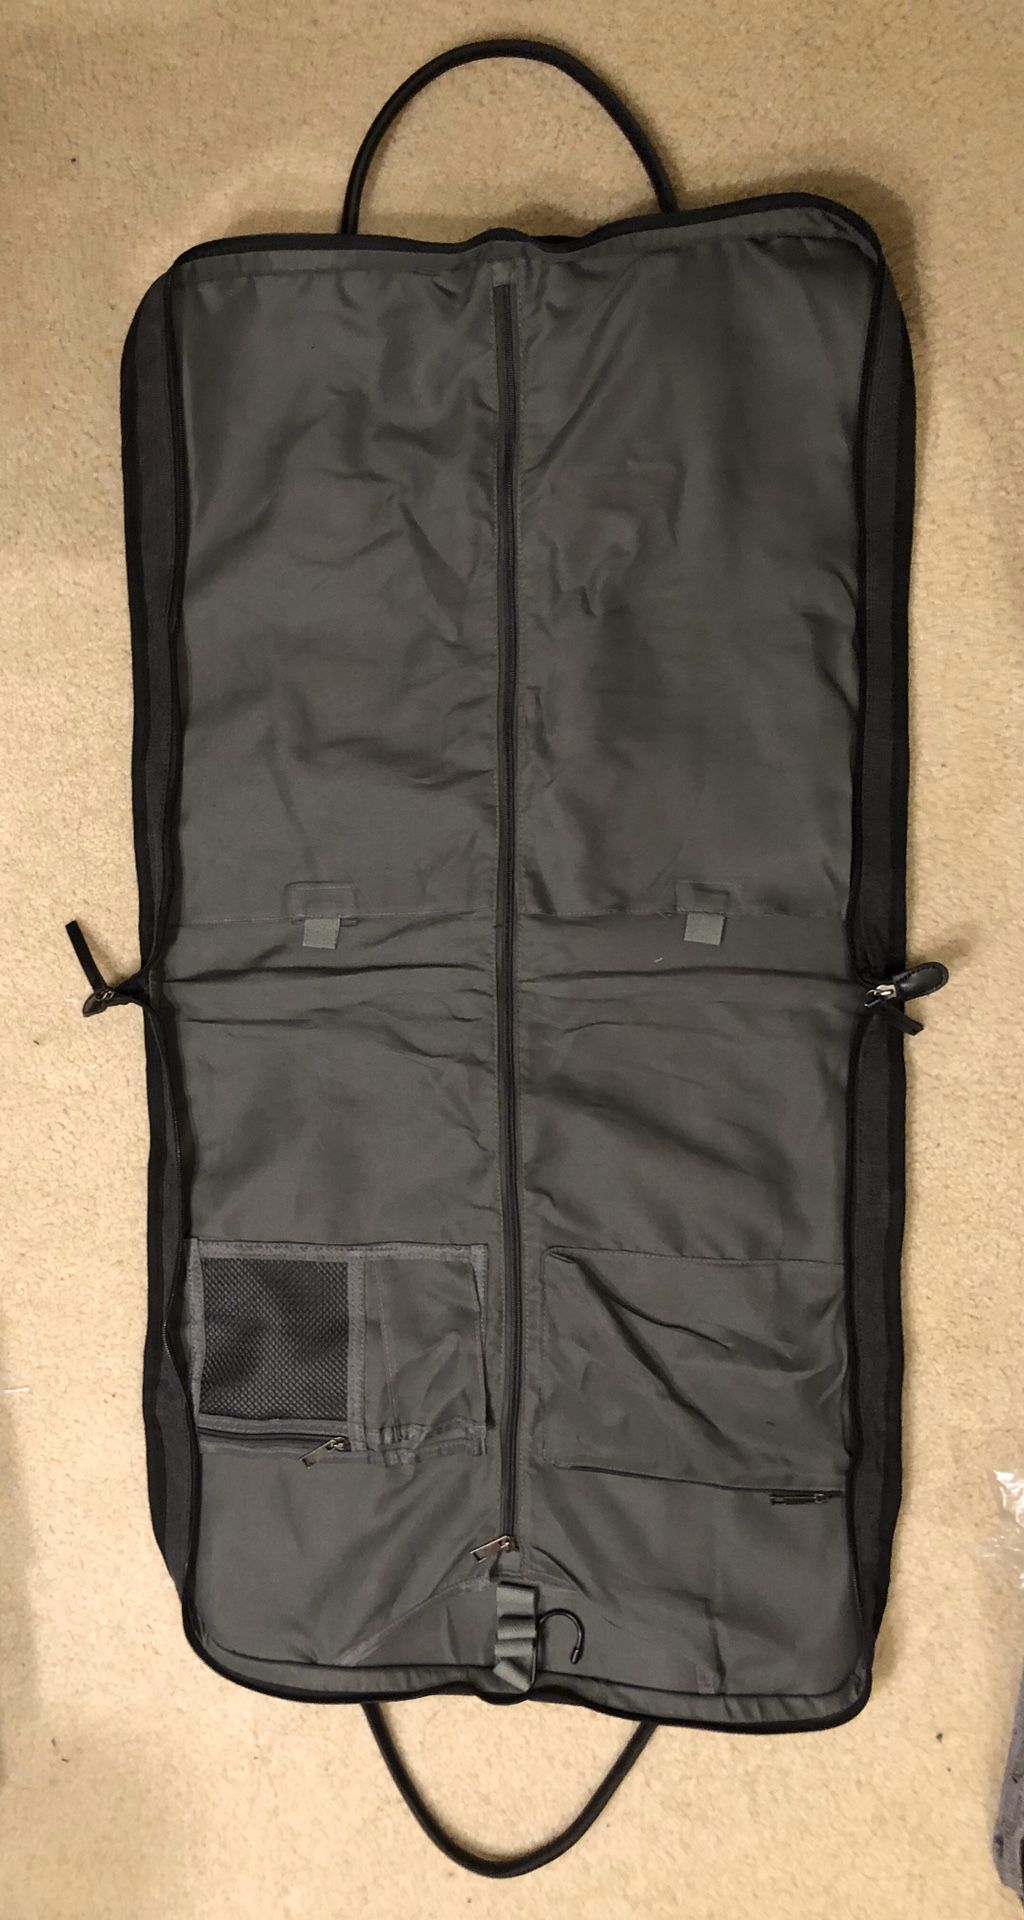 TFSKY Casual Suit Bag Carry On Garment Bag Flight Bag Canvas Suit Shoulder Bag for Travel & Business Trips With Shoulder Strap (Style3, Black)